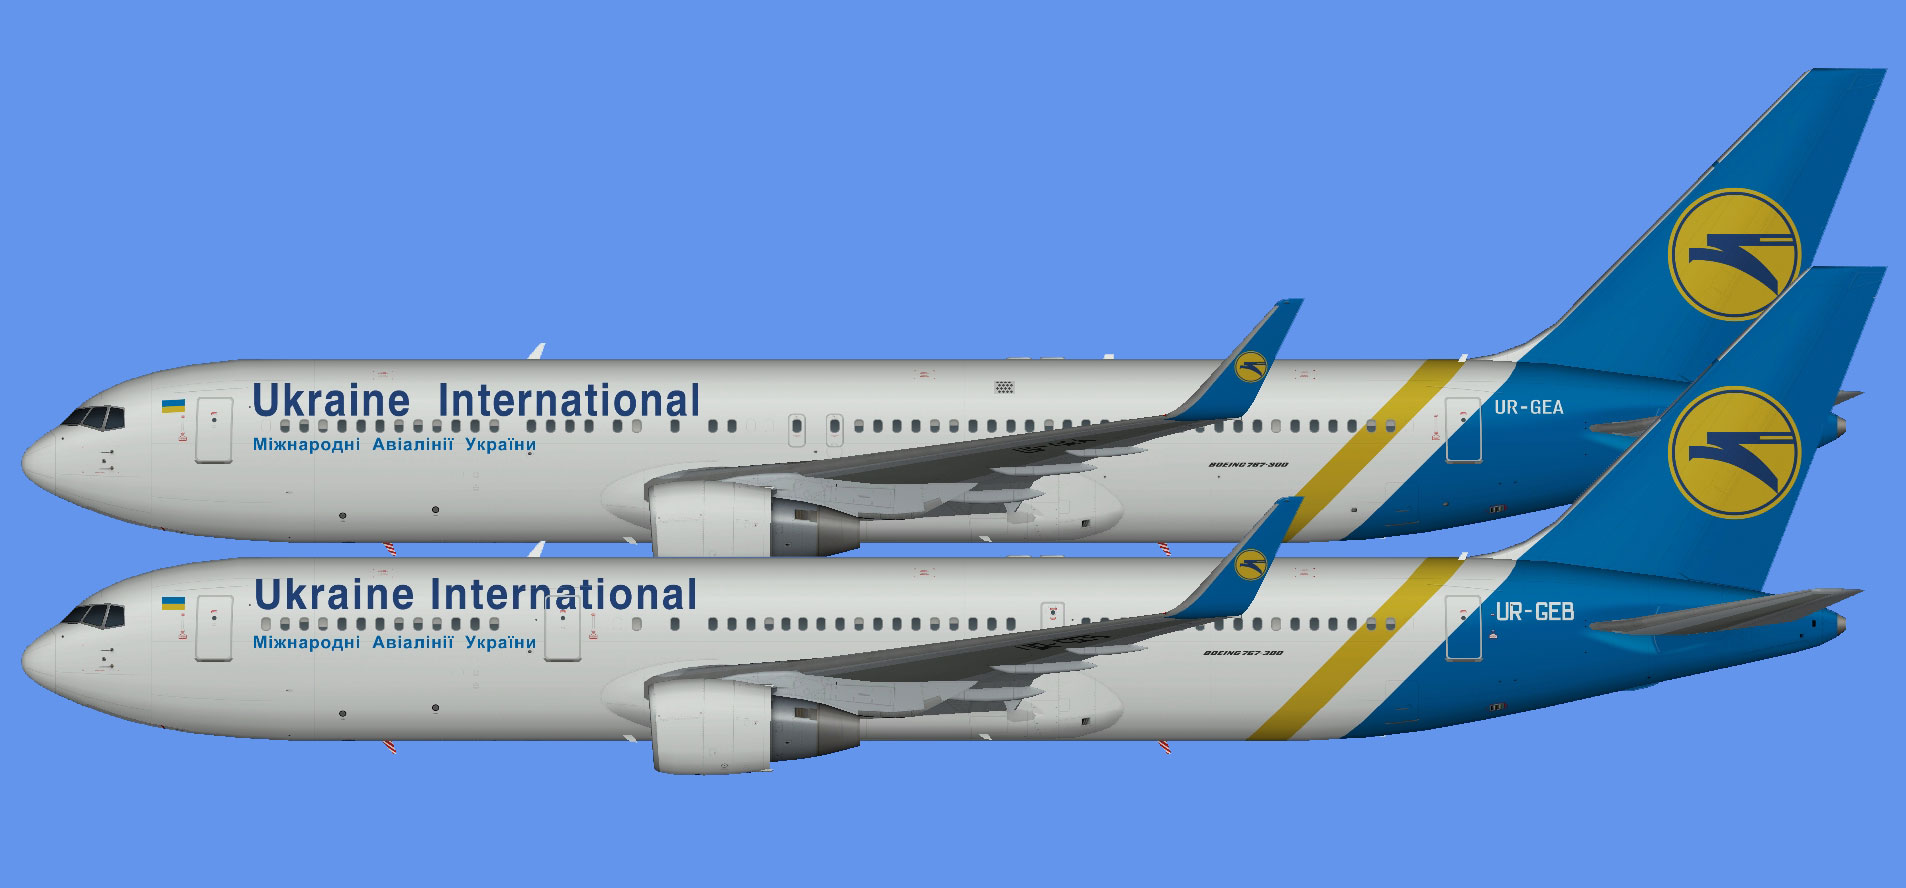 Ukraine International 767-300